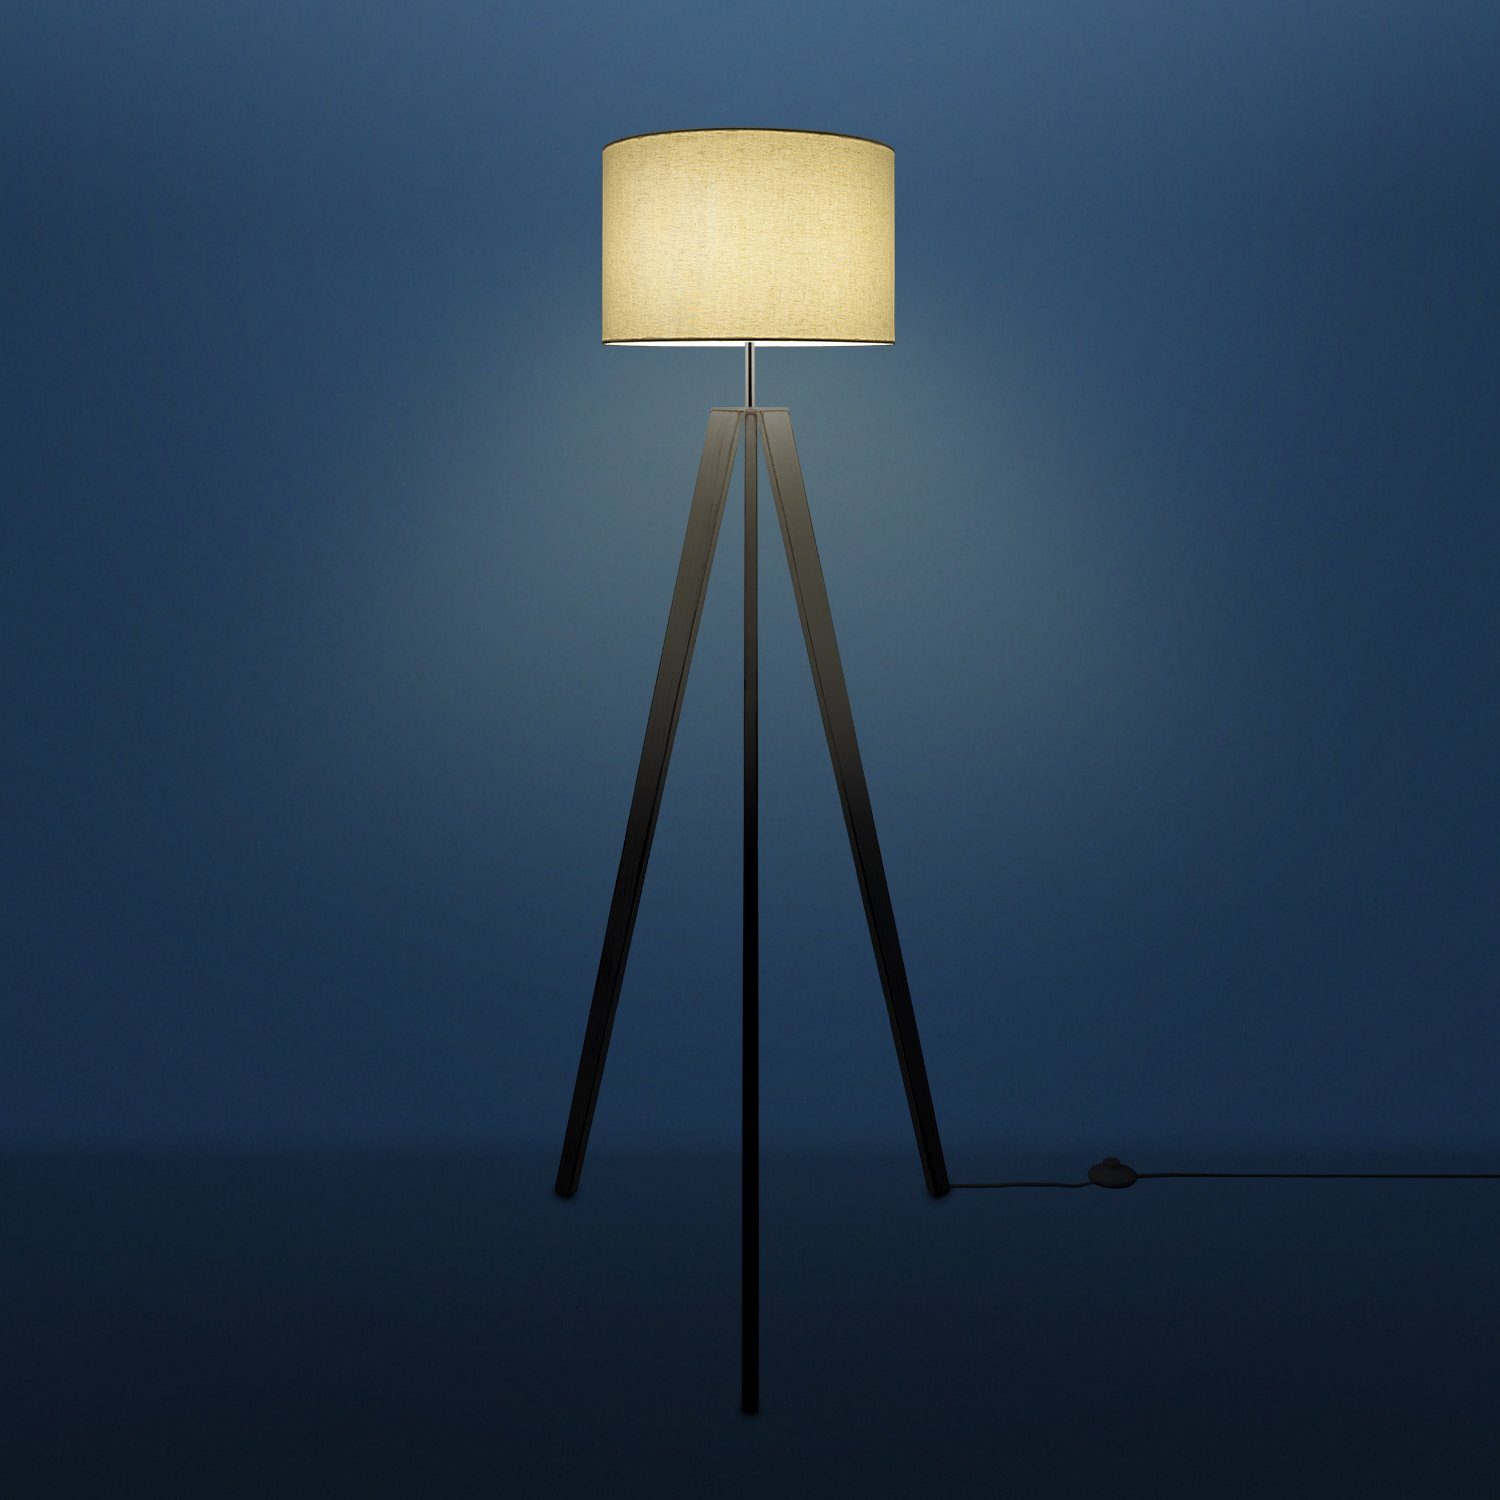 Paco Home Lampe Wohnzimmer ohne Stil Fuß E27 Color, uni Leuchtmittel, Canvas Stehlampe Stehlampe Vintage Skandinavischer LED